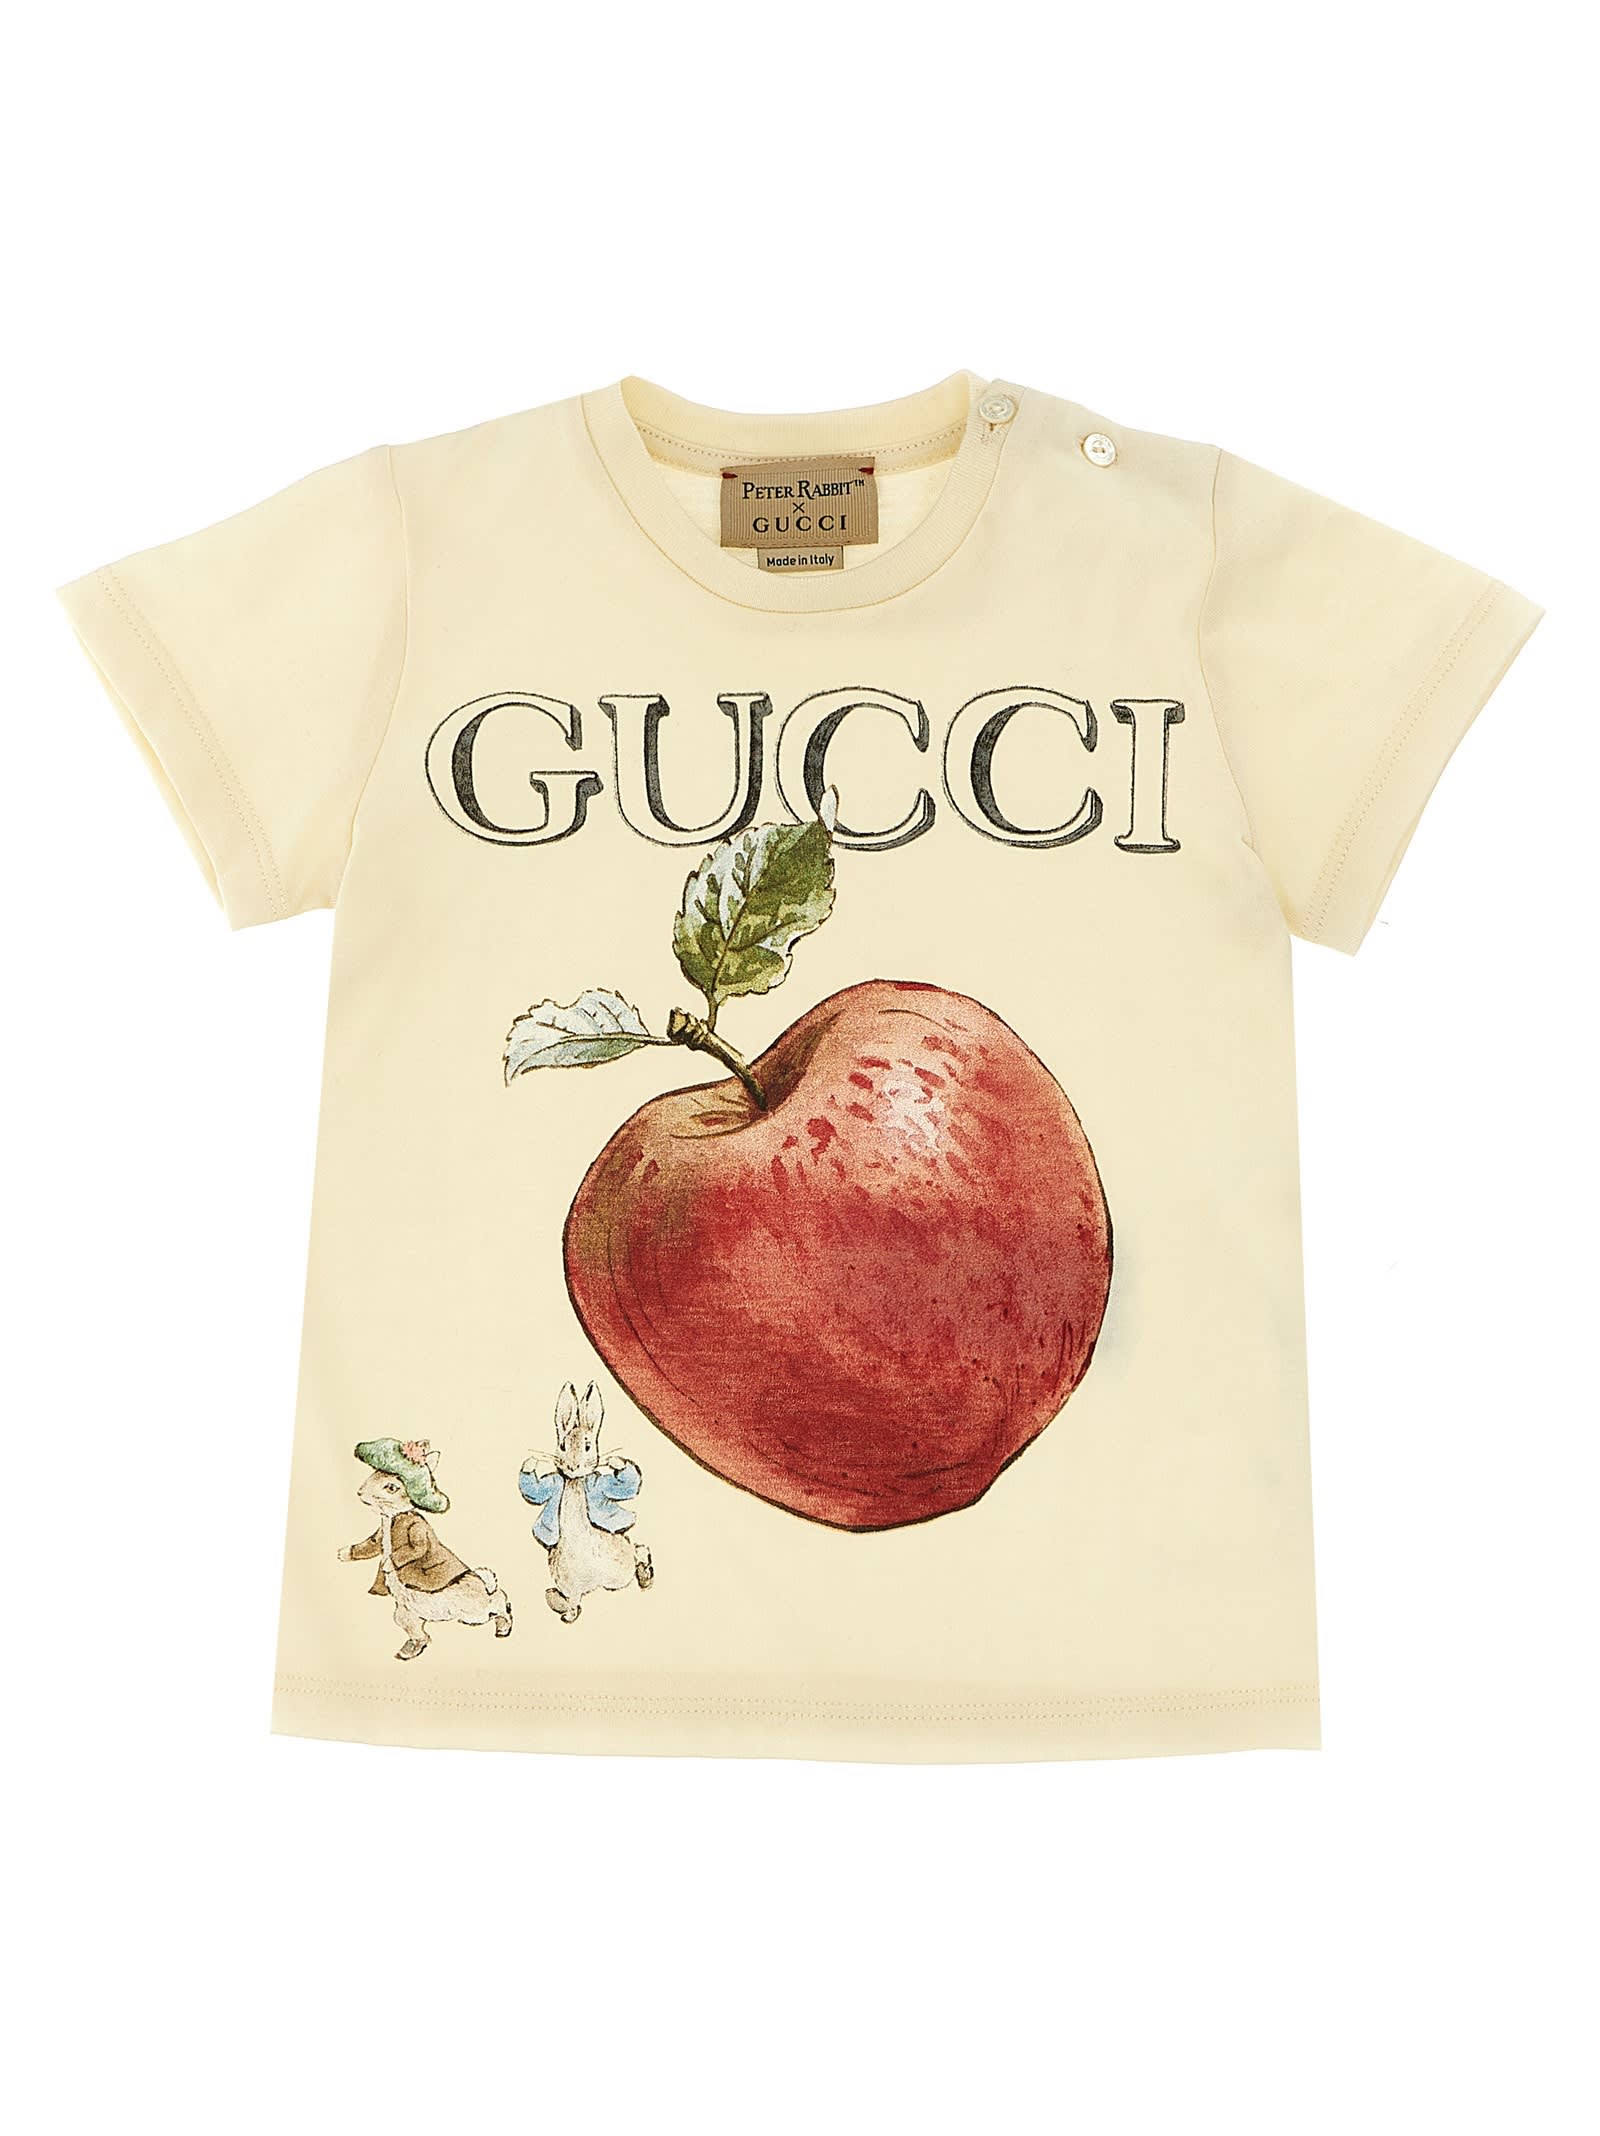 Gucci Babies' Printed T-shirt In Metallic